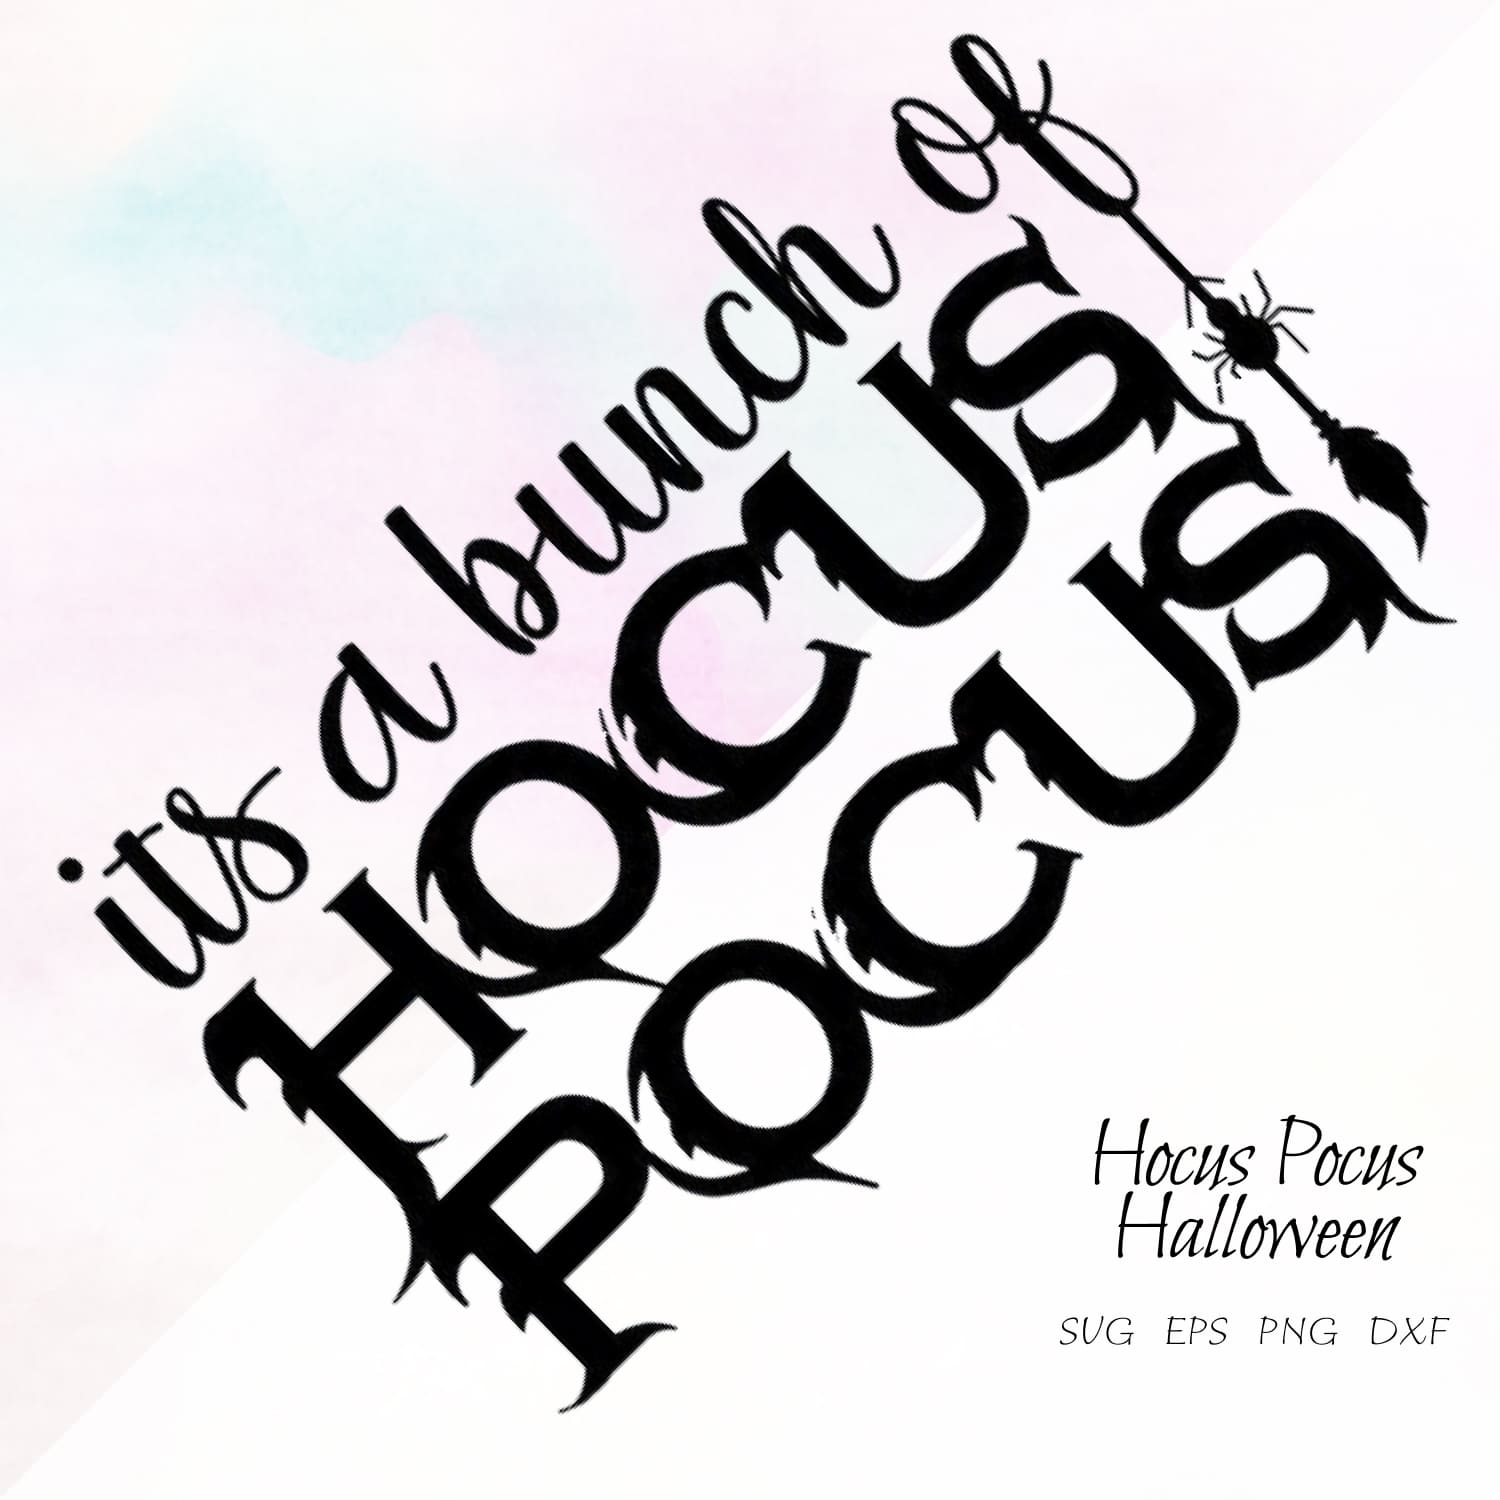 Hocus Pocus SVG - Halloween PNg DXF EPS Cut File.